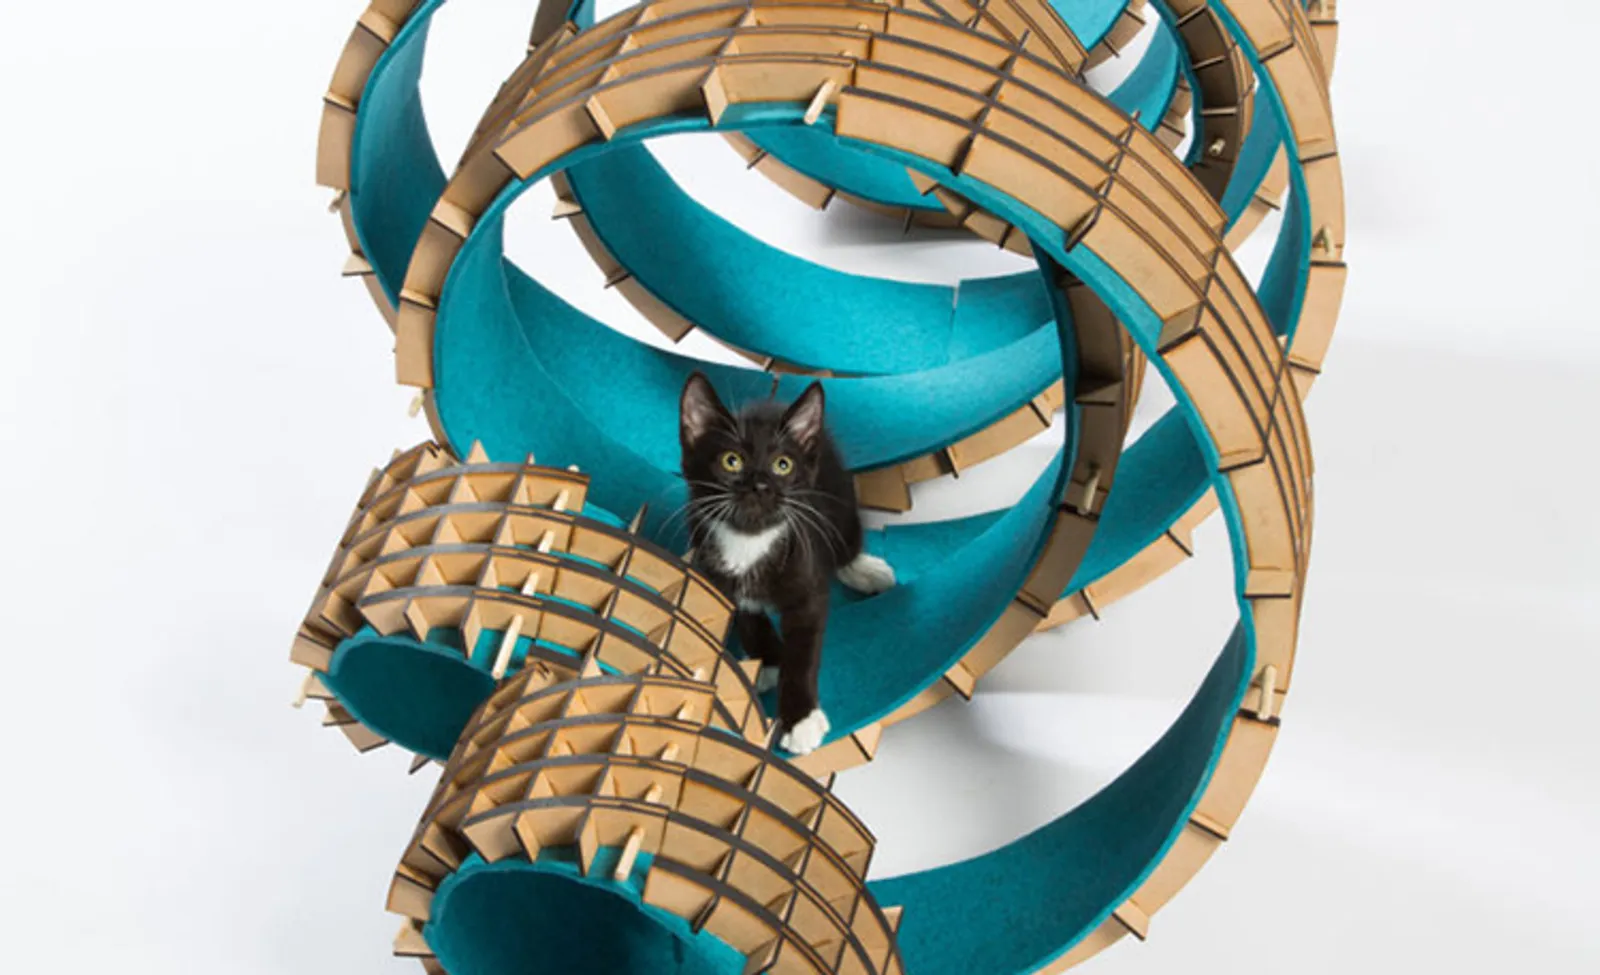 Prihatin dengan Kucing Liar, Para Arsitektur Rancang Instalasi Unik Ini 